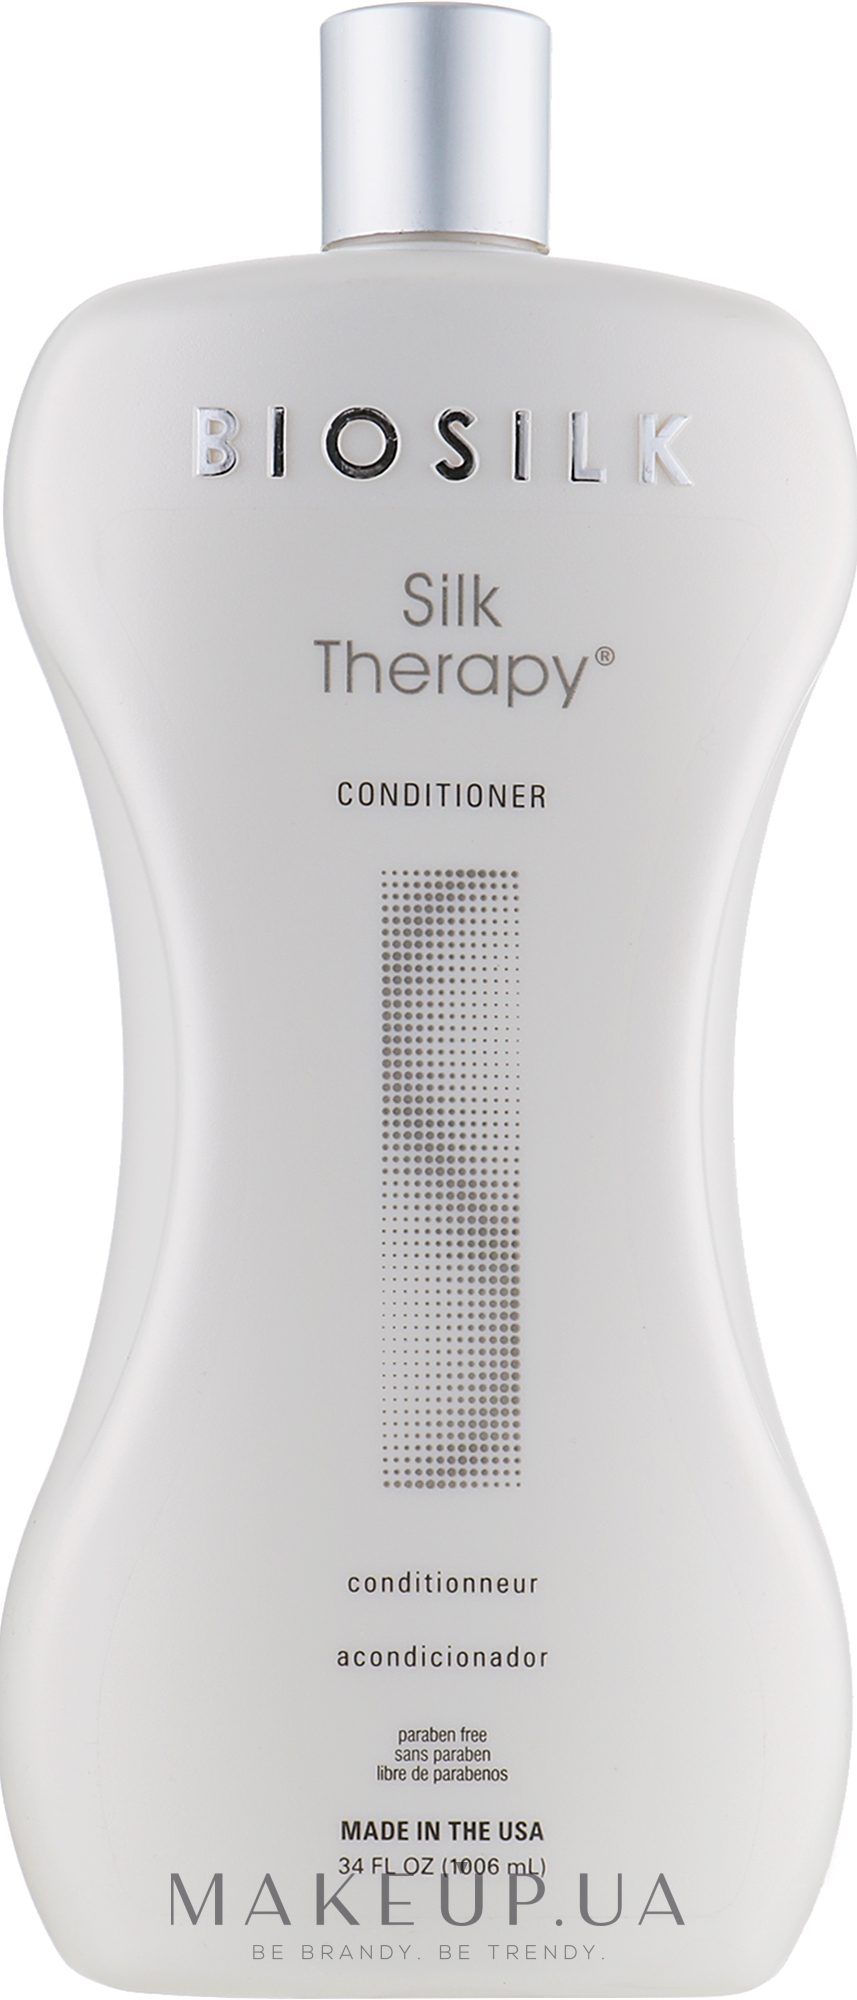 Кондиционер "Шелковая терапия" - BioSilk Silk Therapy Conditioner — фото 1006ml